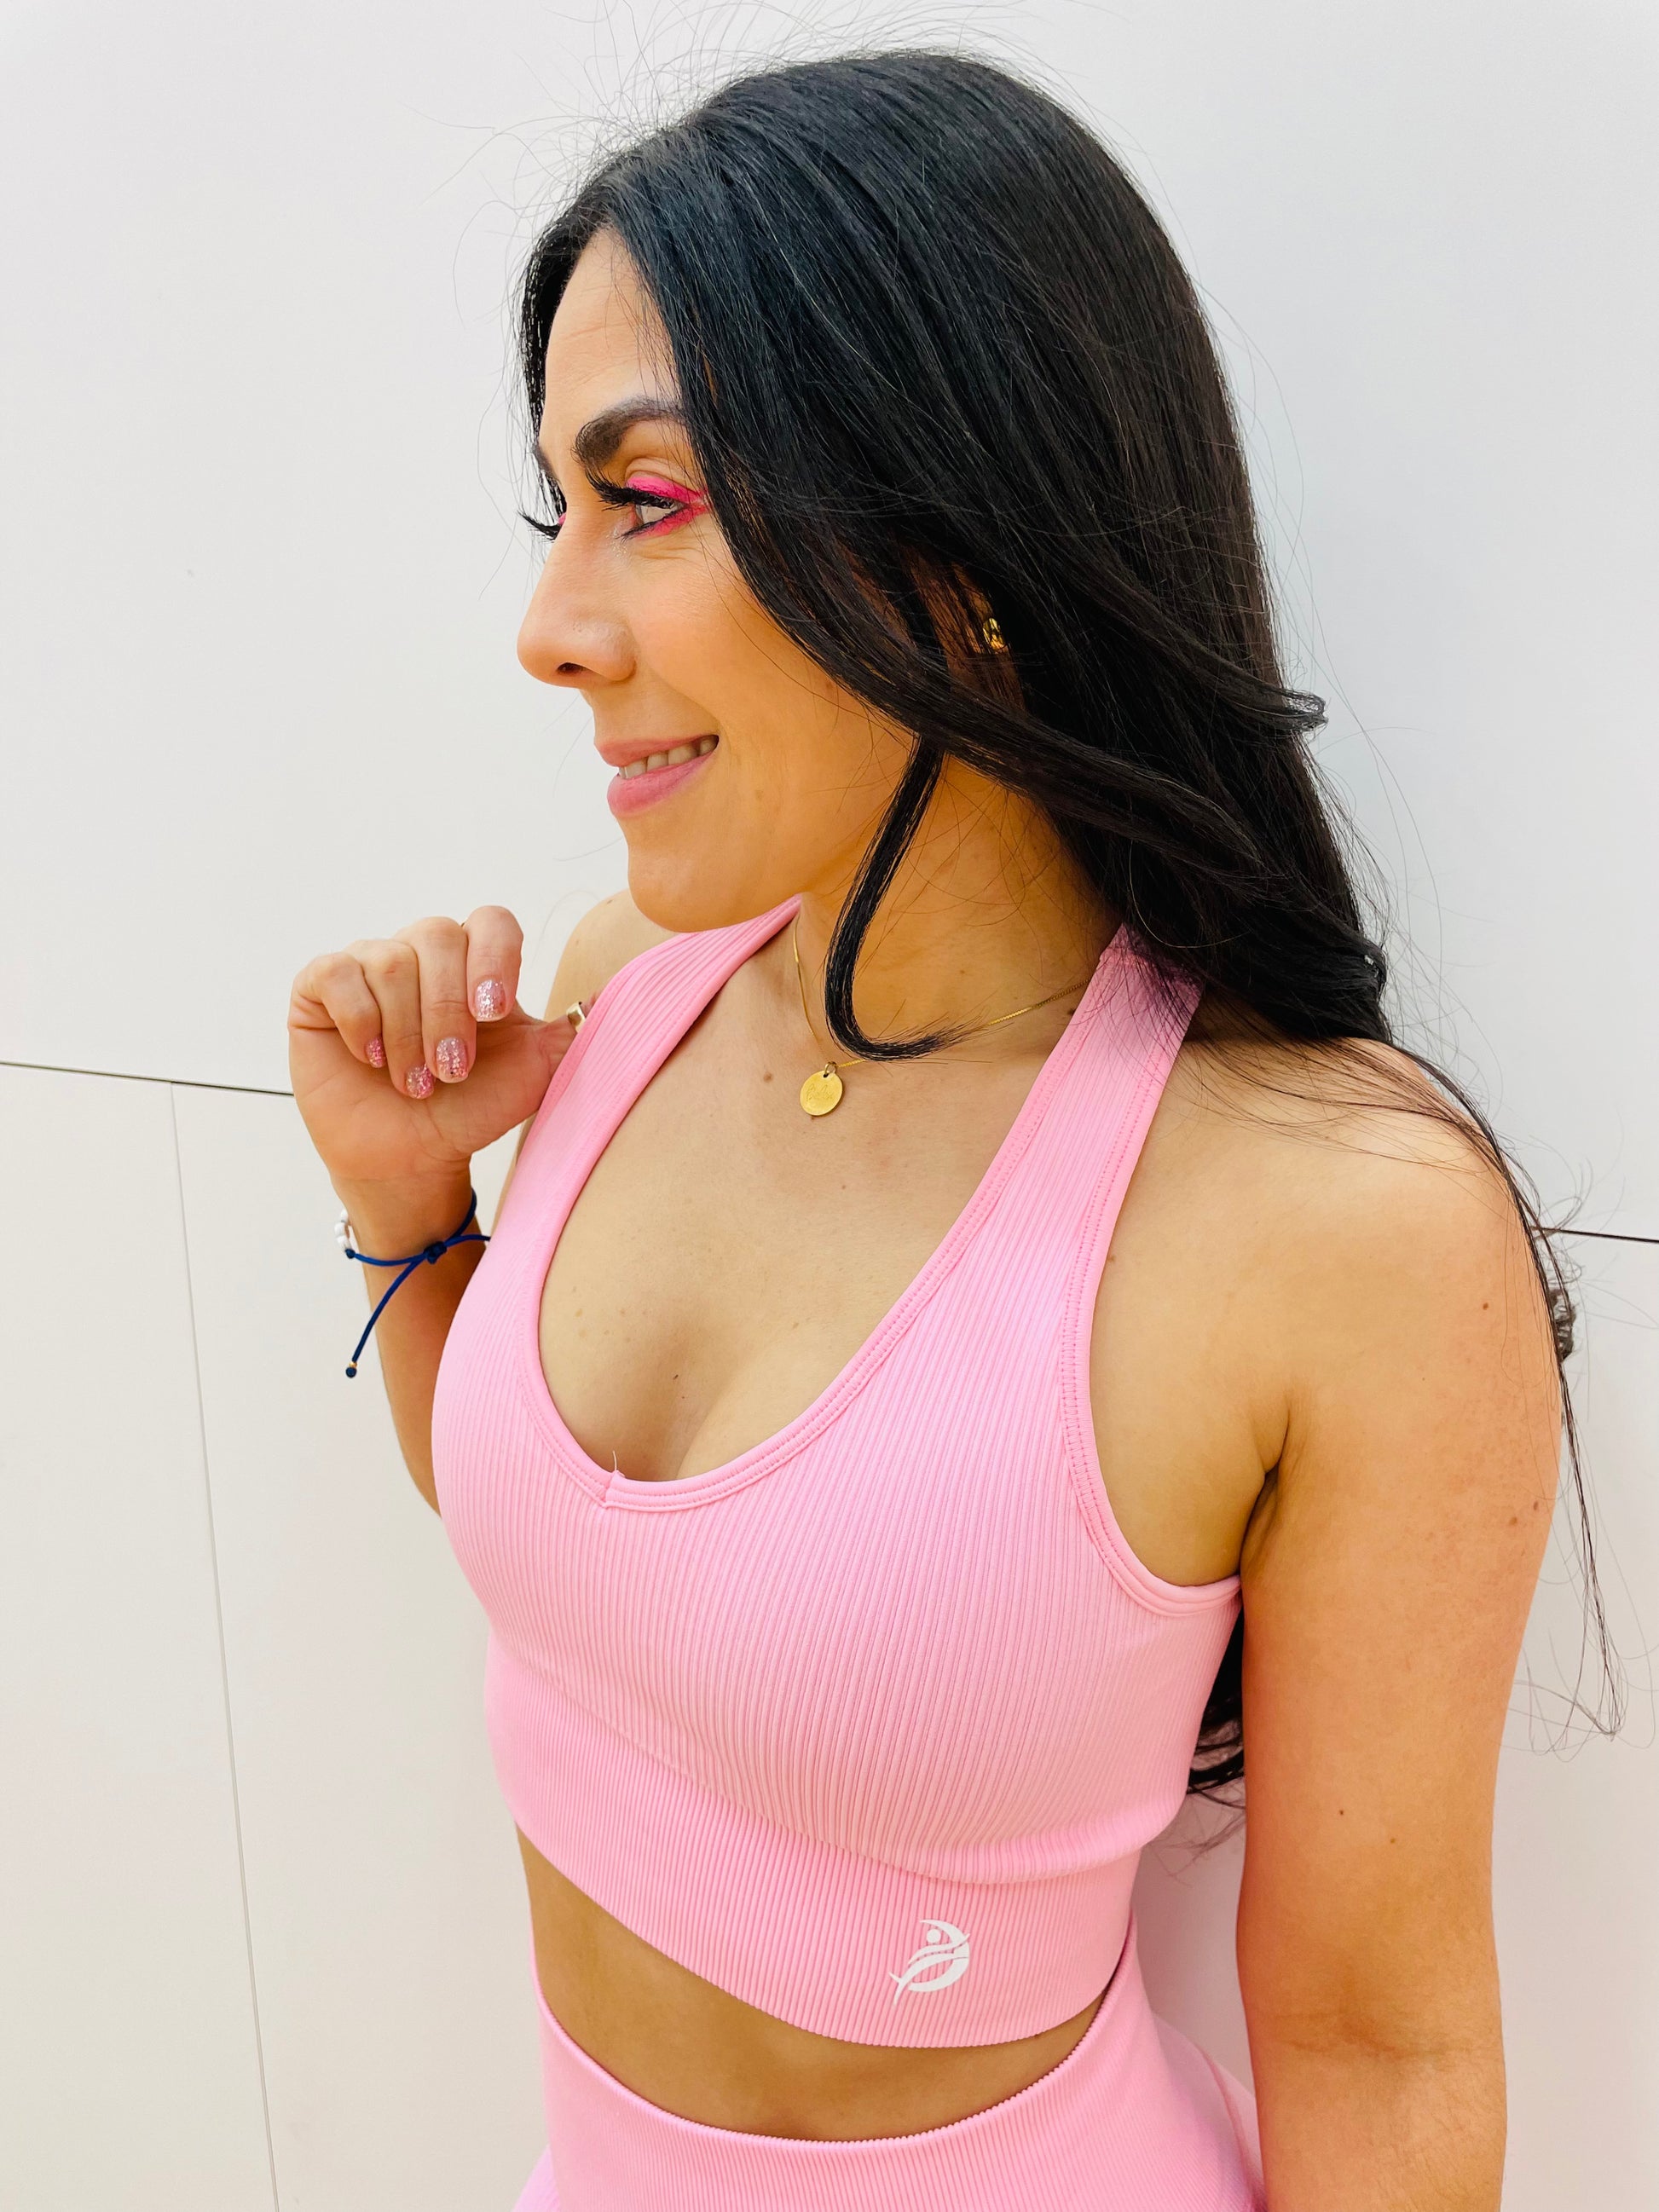 Dreamy sports bra pretty pink